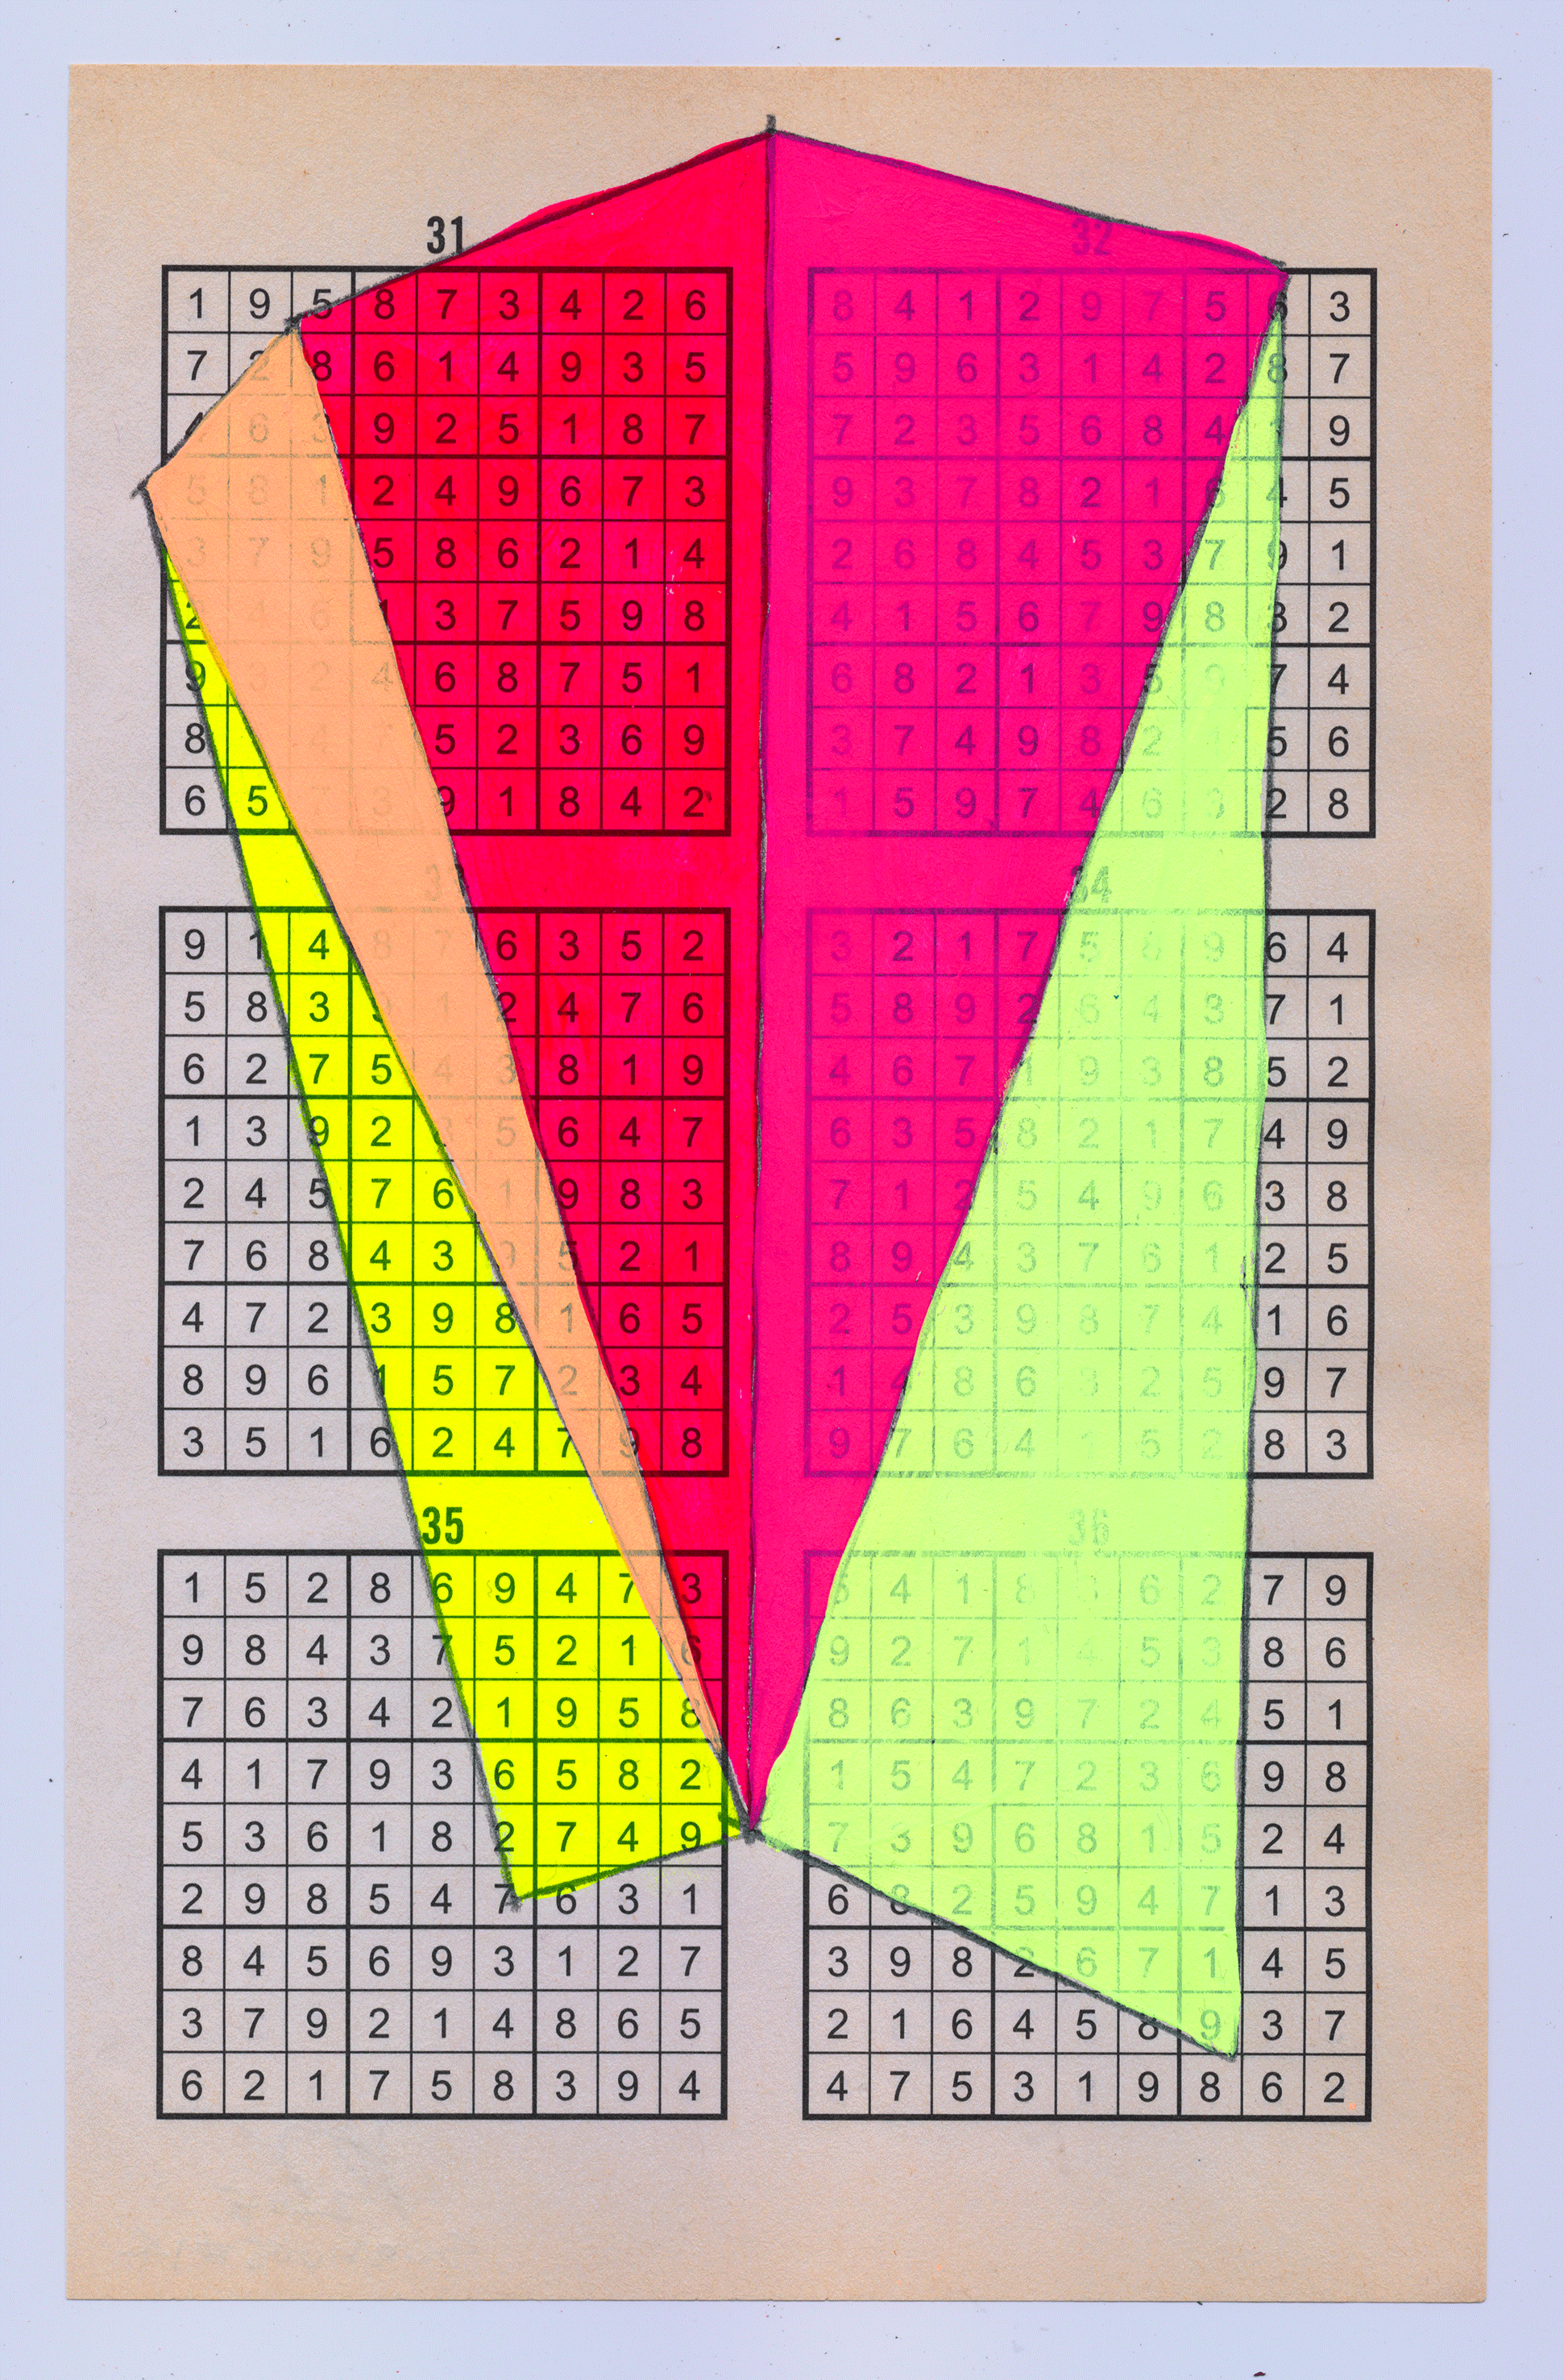   Sudoku15#13, 6" X 9.25", mixed media on Sudoku paper, 2015   SOLD  